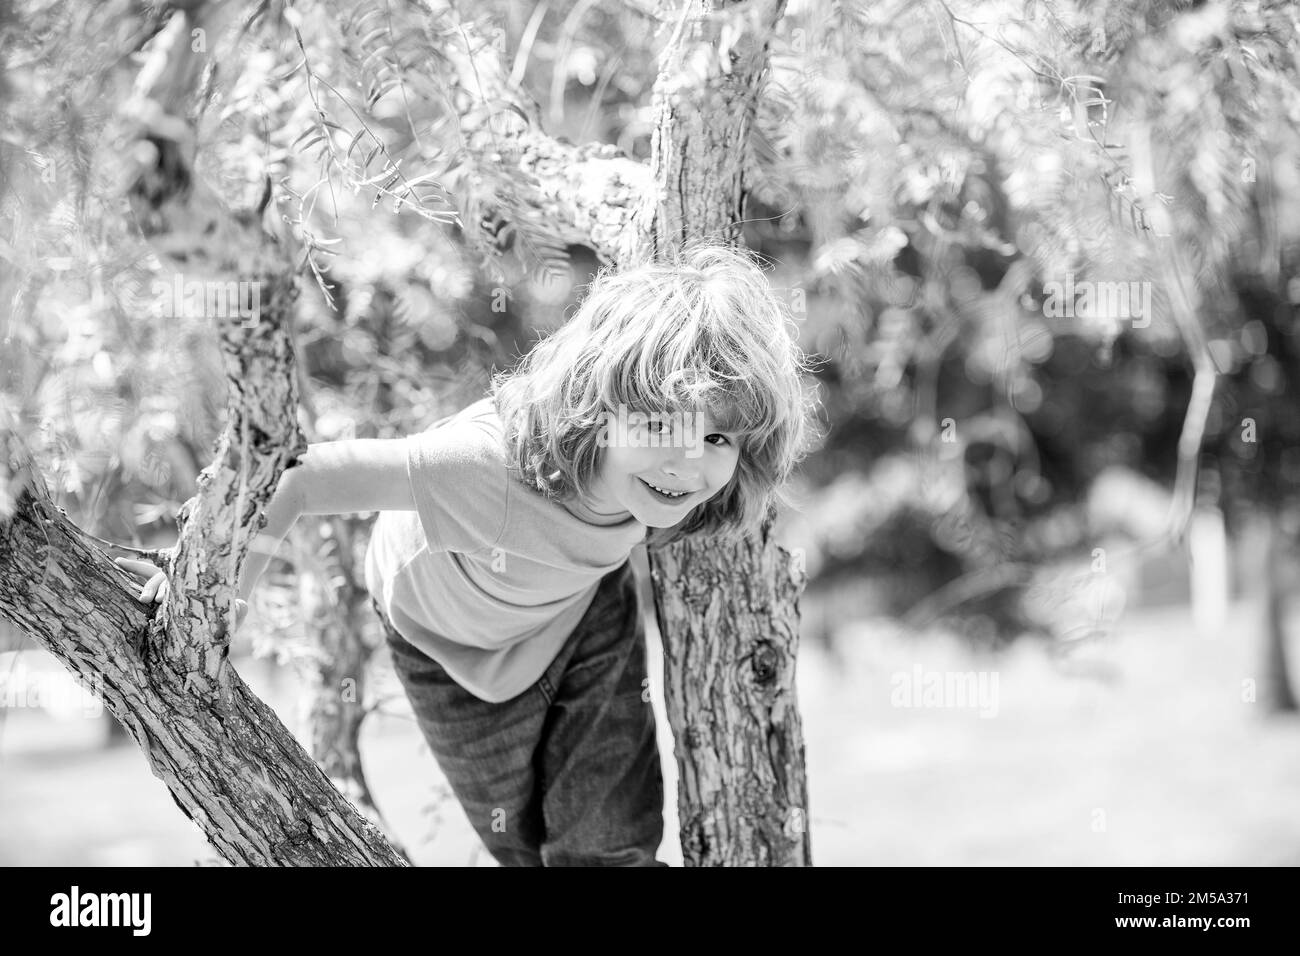 Climbing trees is always fun. Active boy child climb tree. Childhood fun. Summer activities Stock Photo